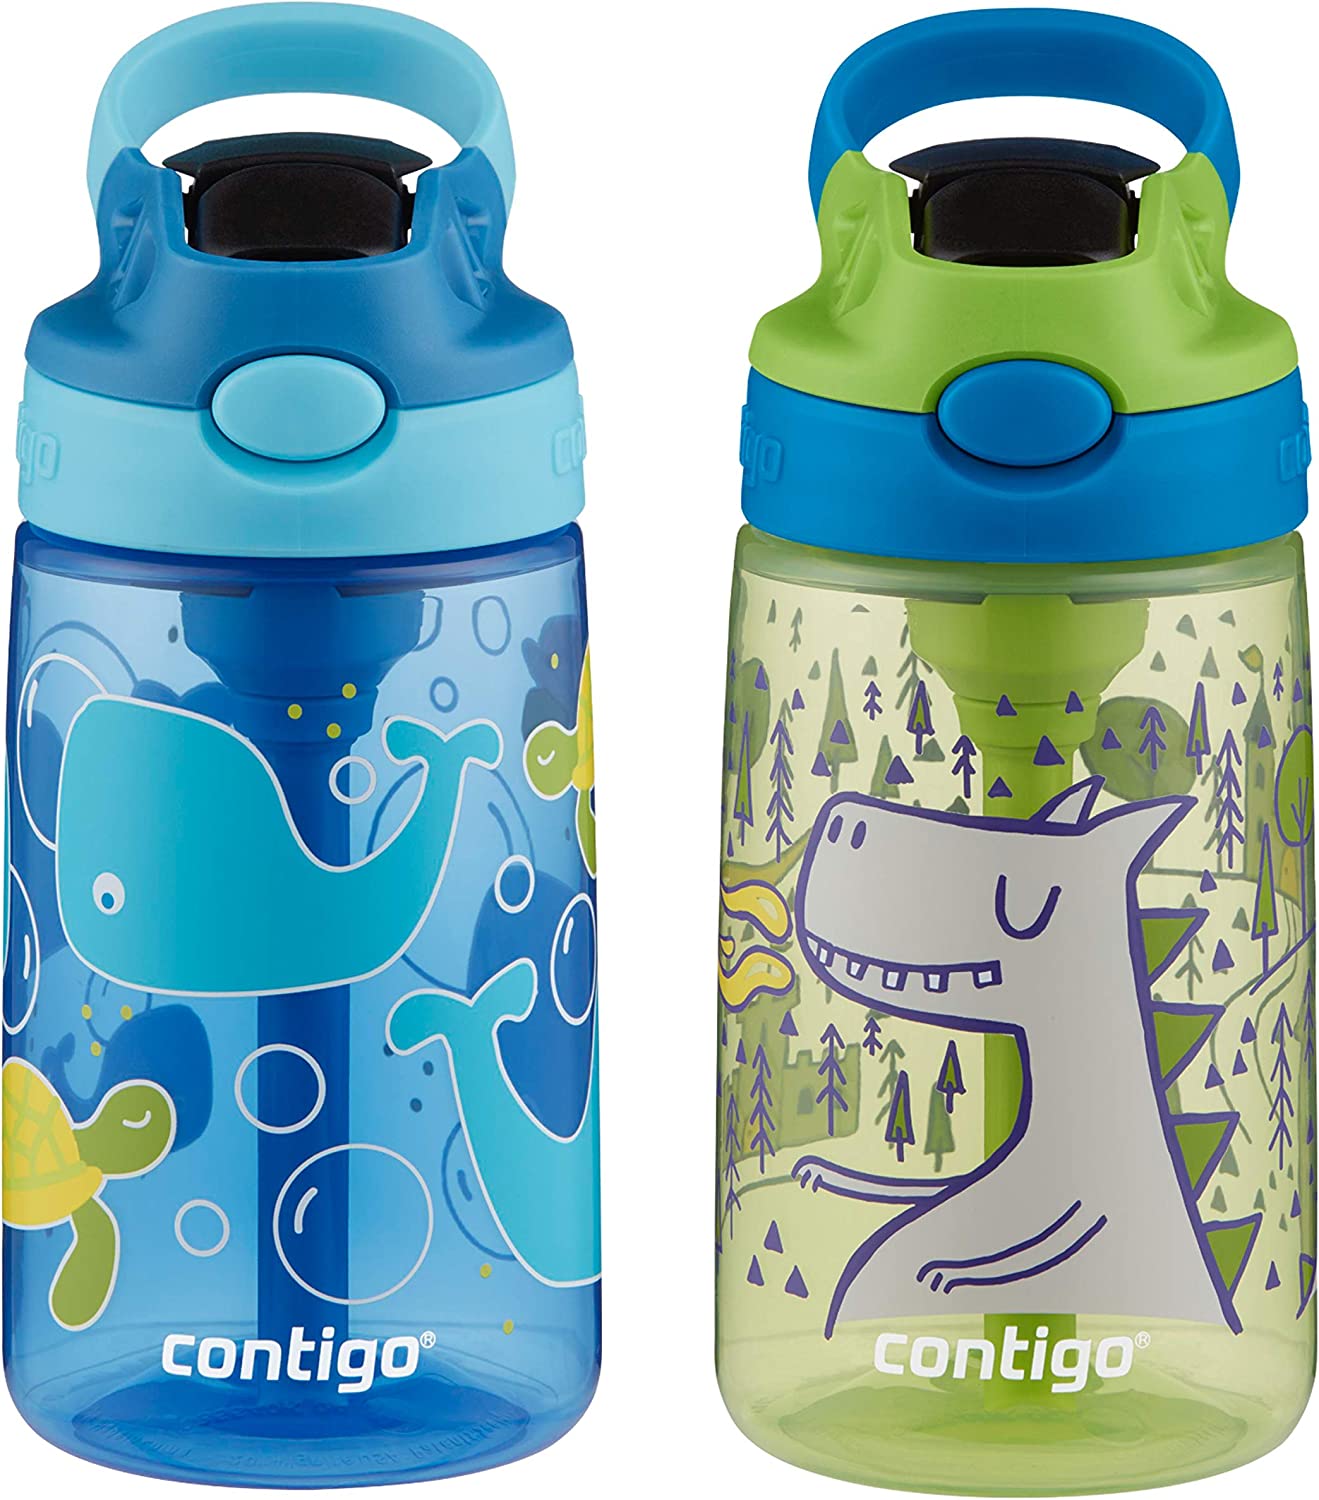 Contigo Kids' Leighton Straw Tumbler with Spill-Proof Leak-Proof